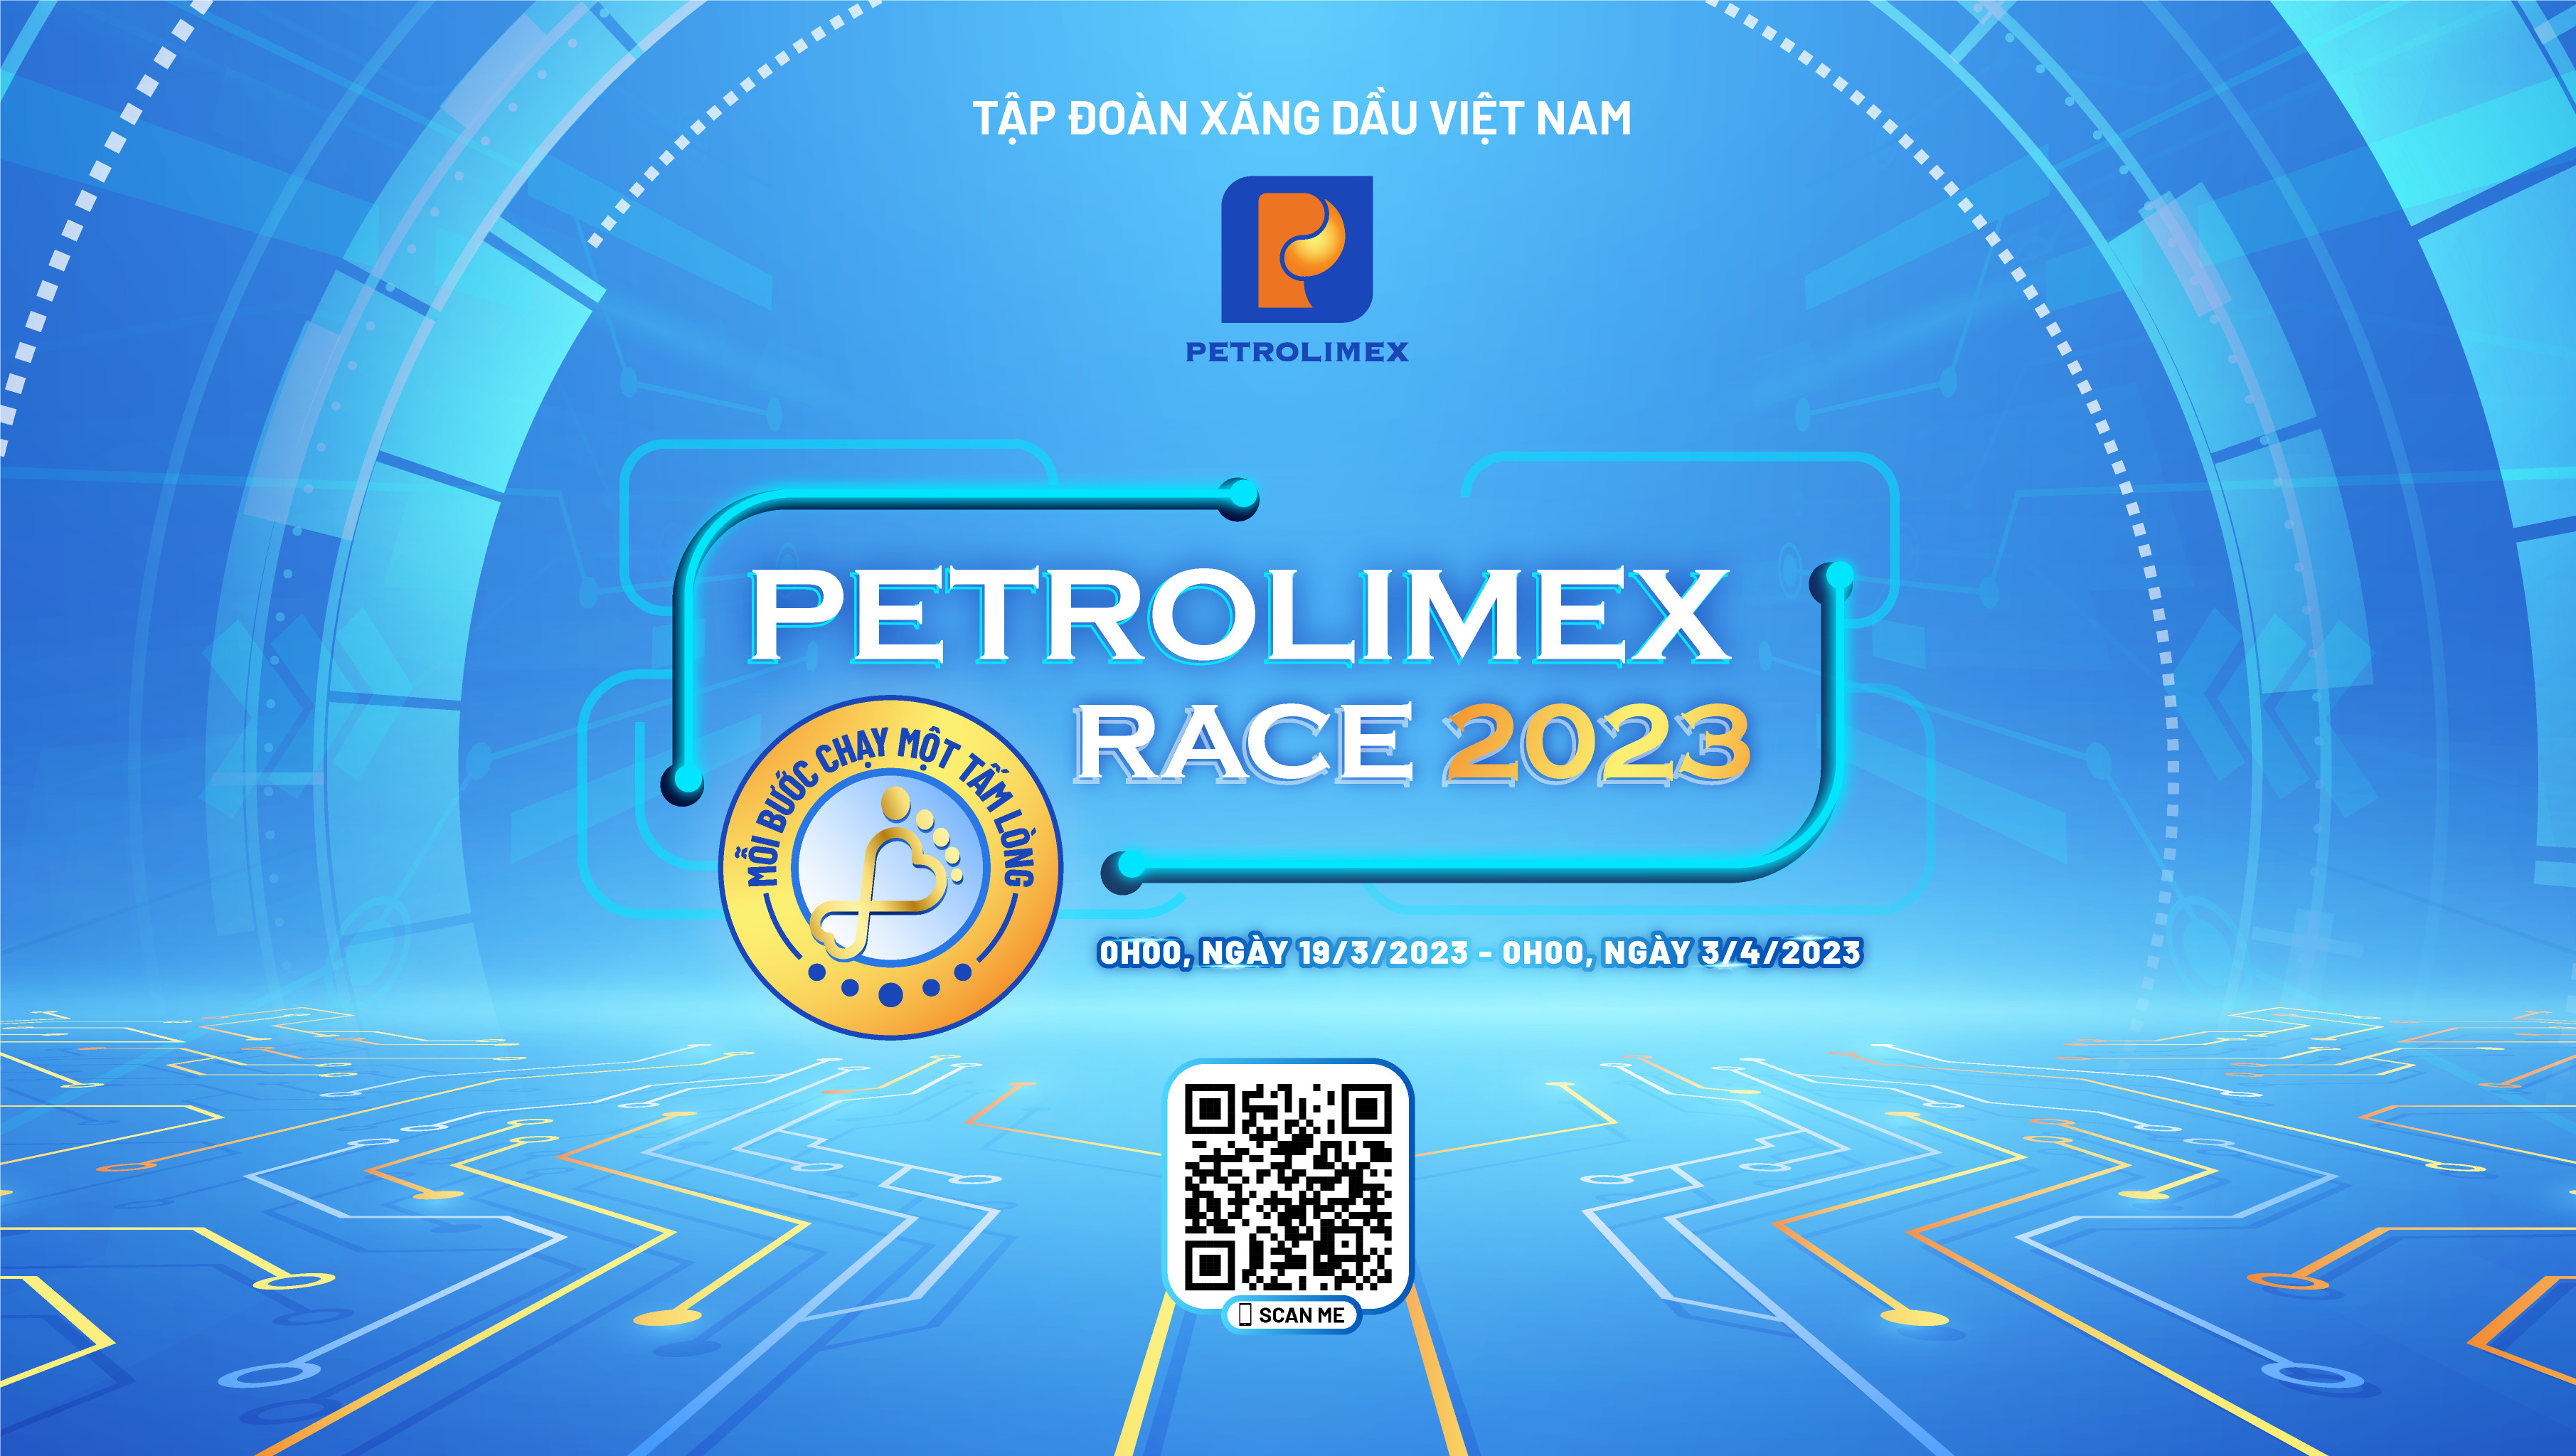 PETROLIMEX RACE 2023